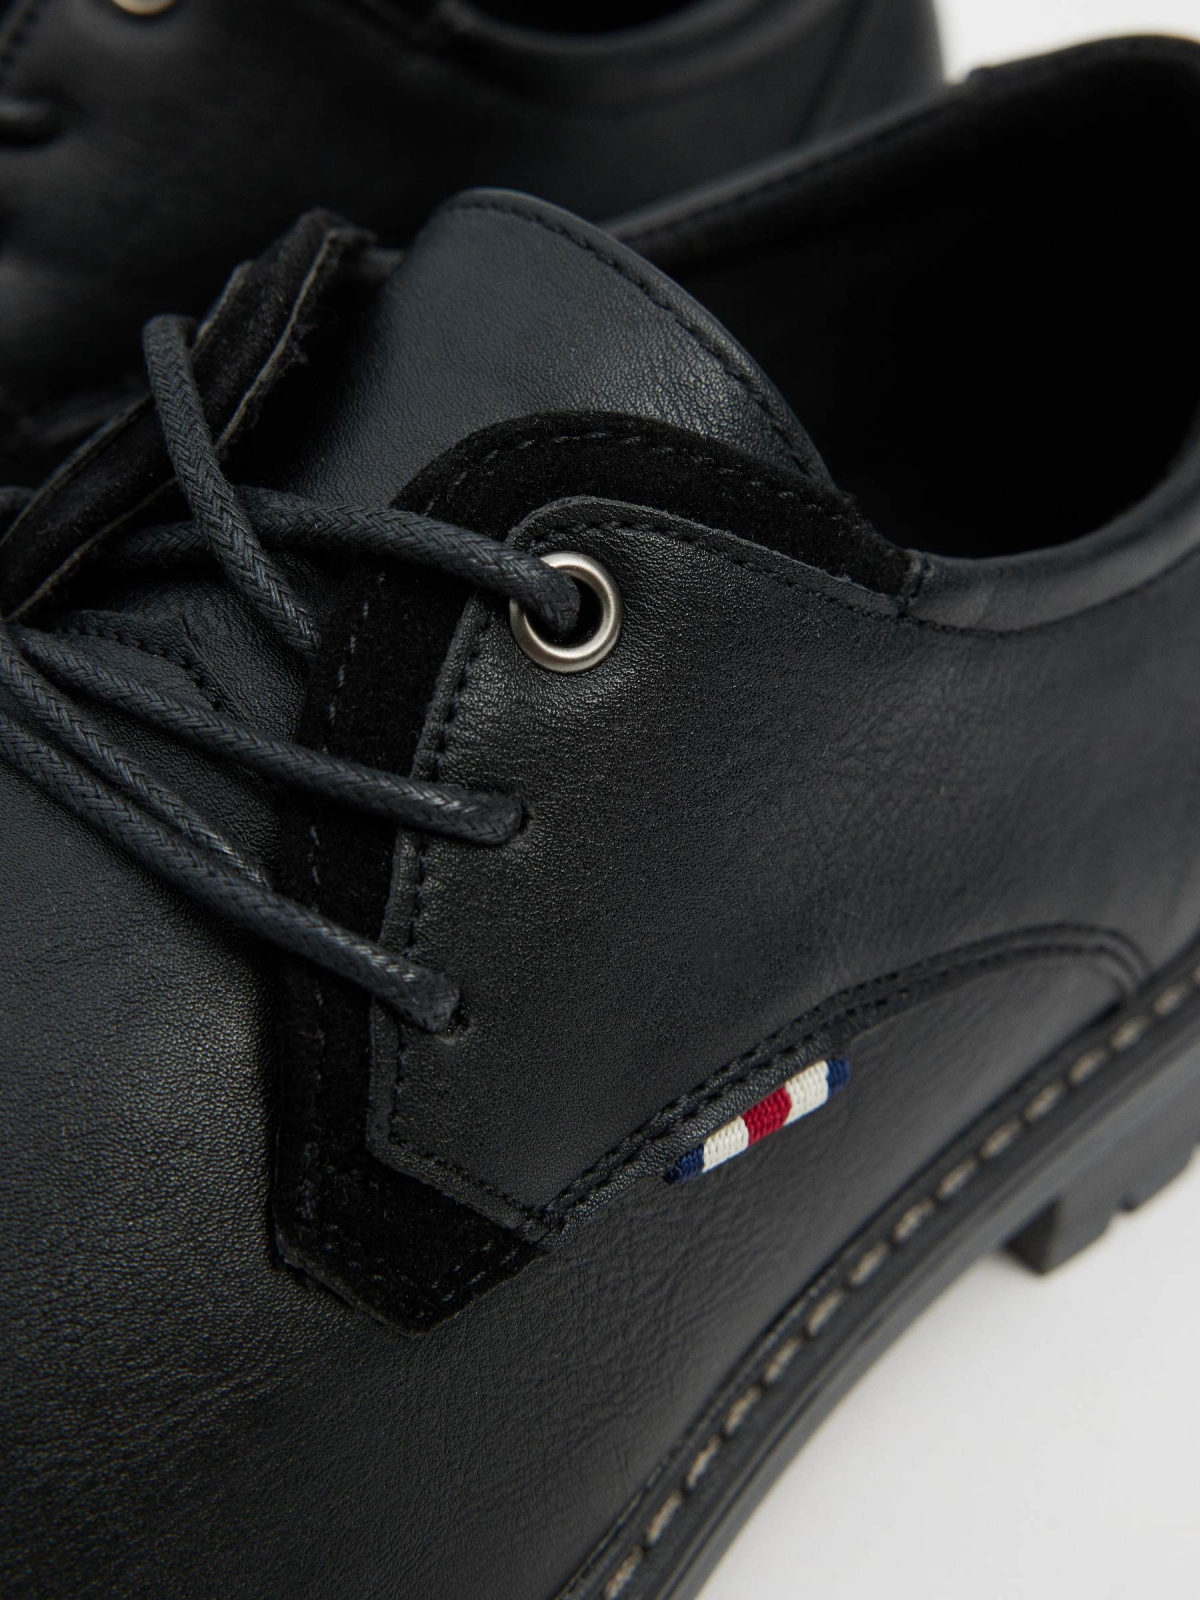 Black leather effect shoe black detail view